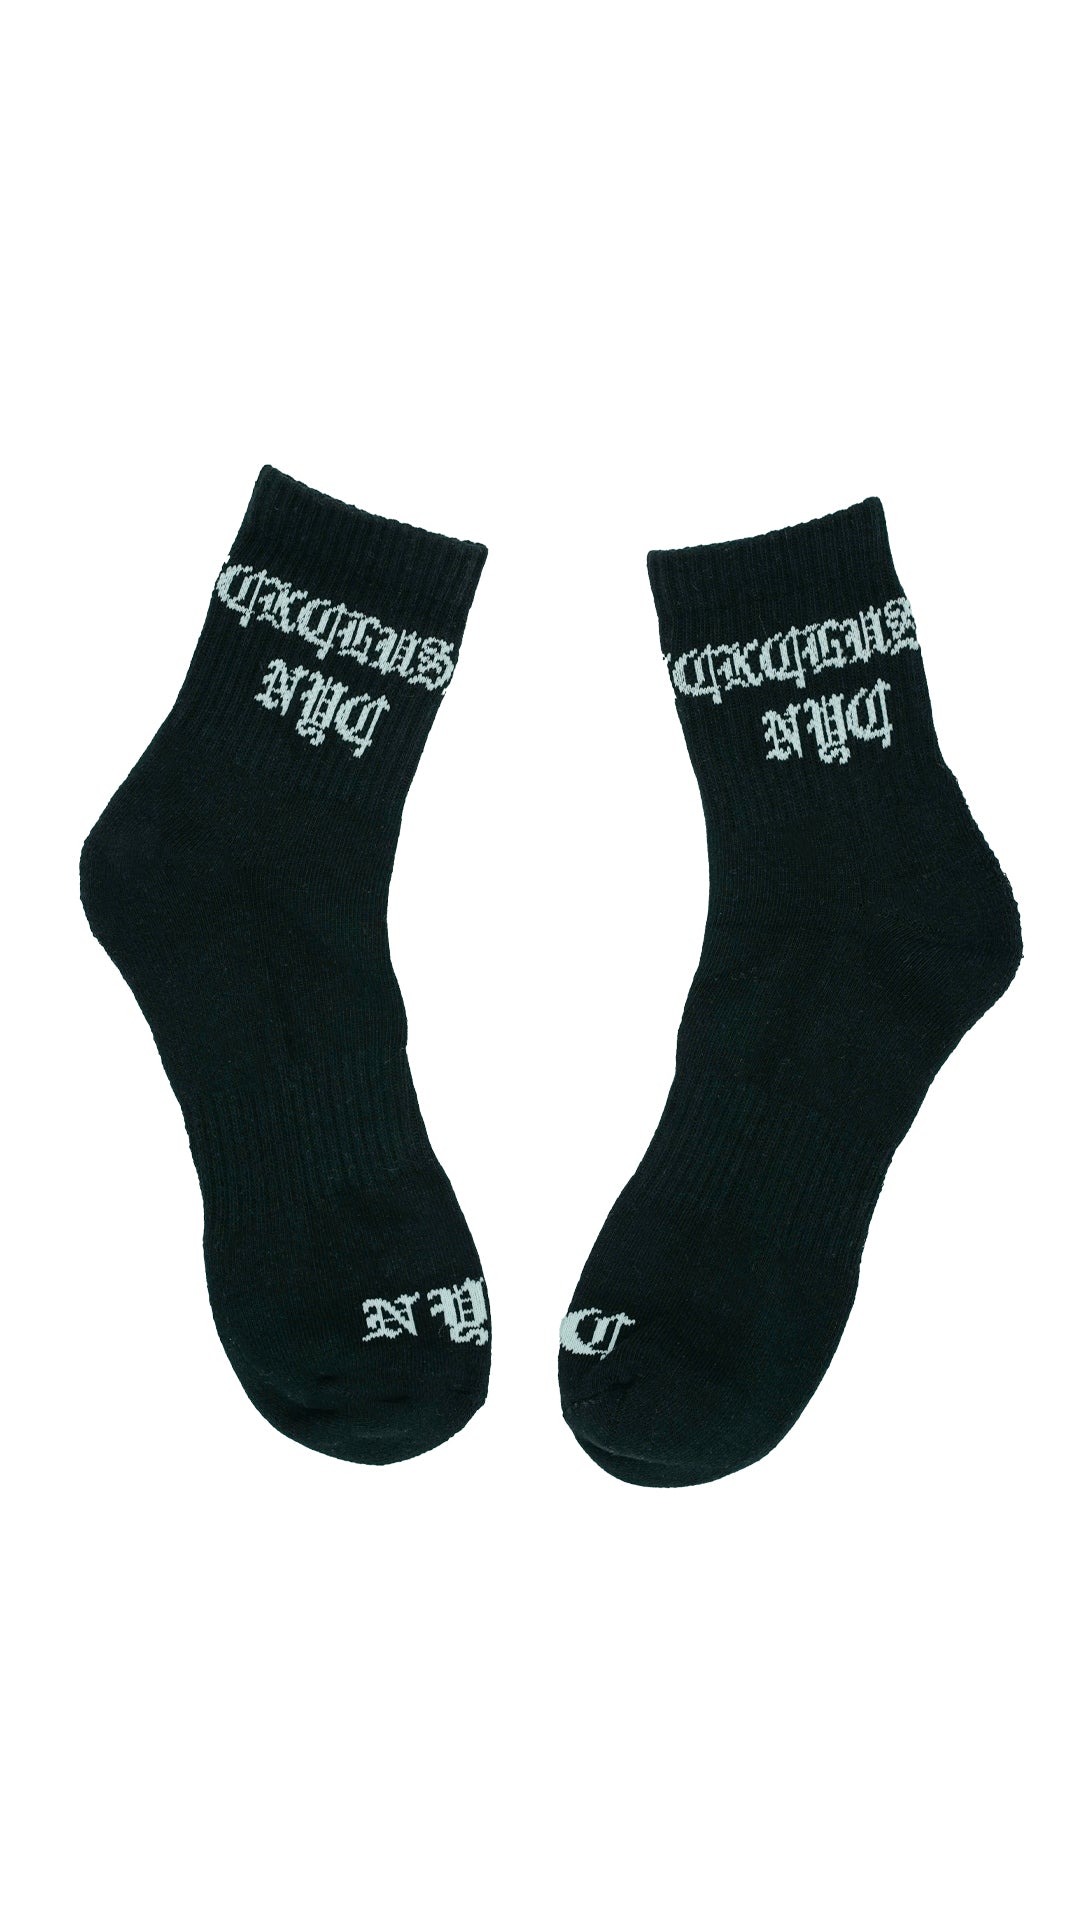 Kickclusive NYC Exclusive Socks BLACK